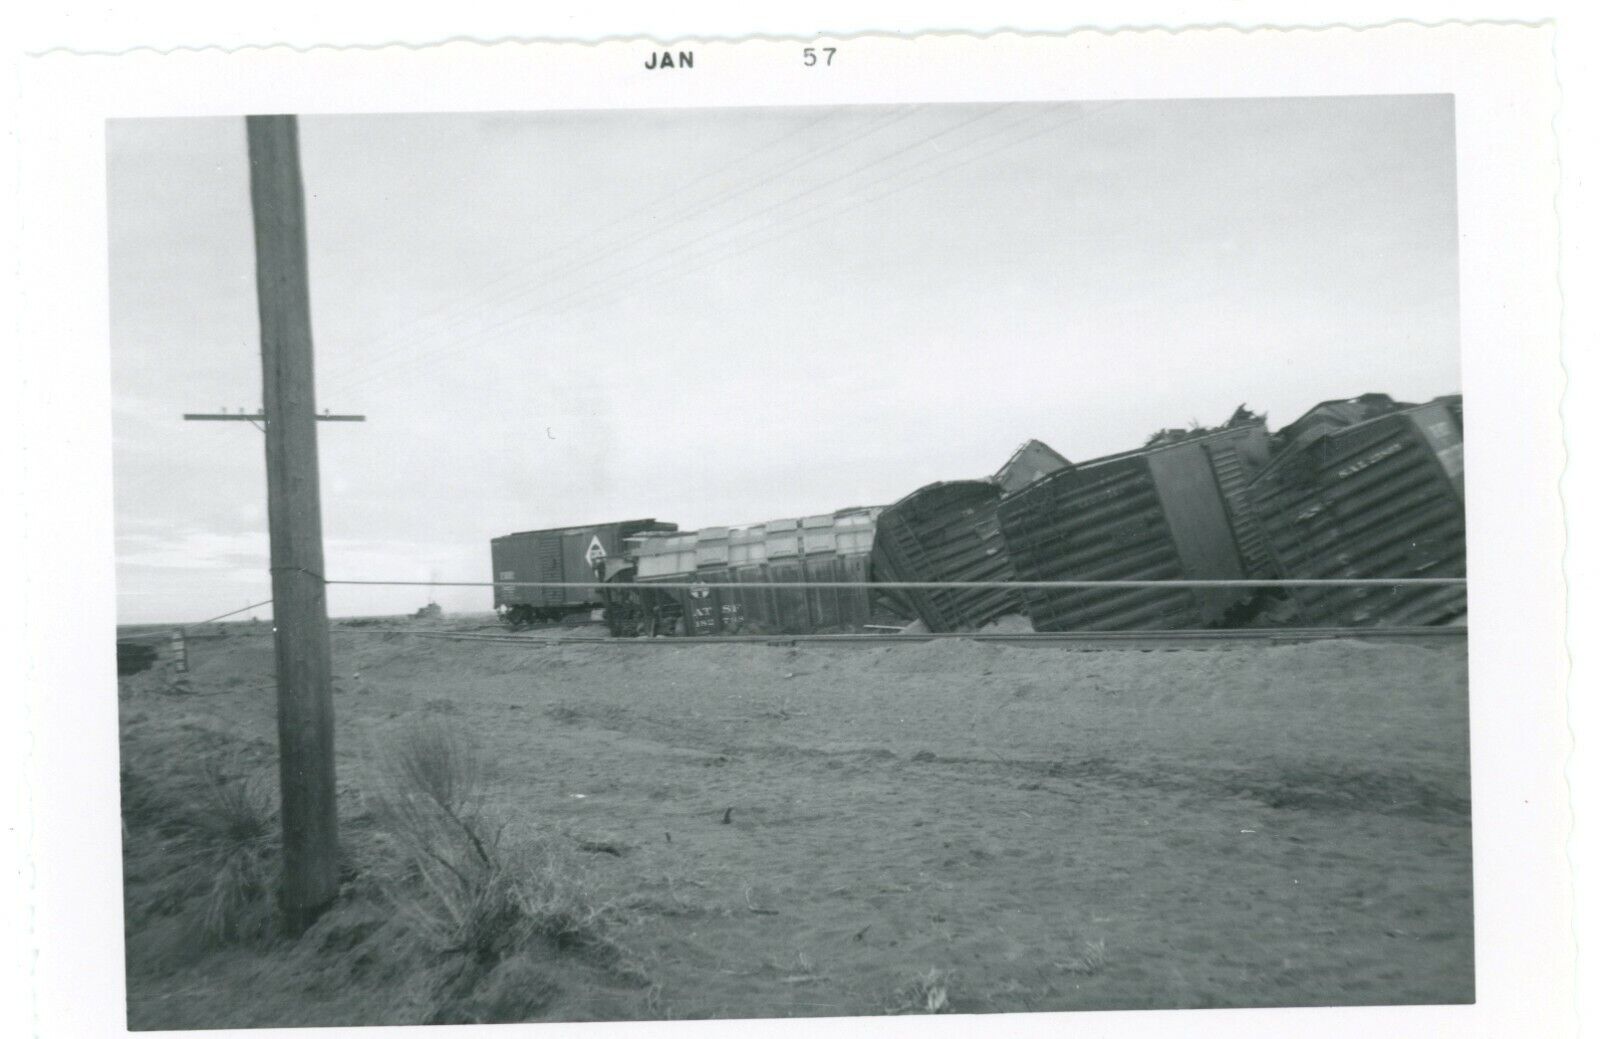 1957 VINTAGE PHOTO SNAPSHOT Delphos, New Mexico TRAIN WRECK GHOST TOWN 1950s #12